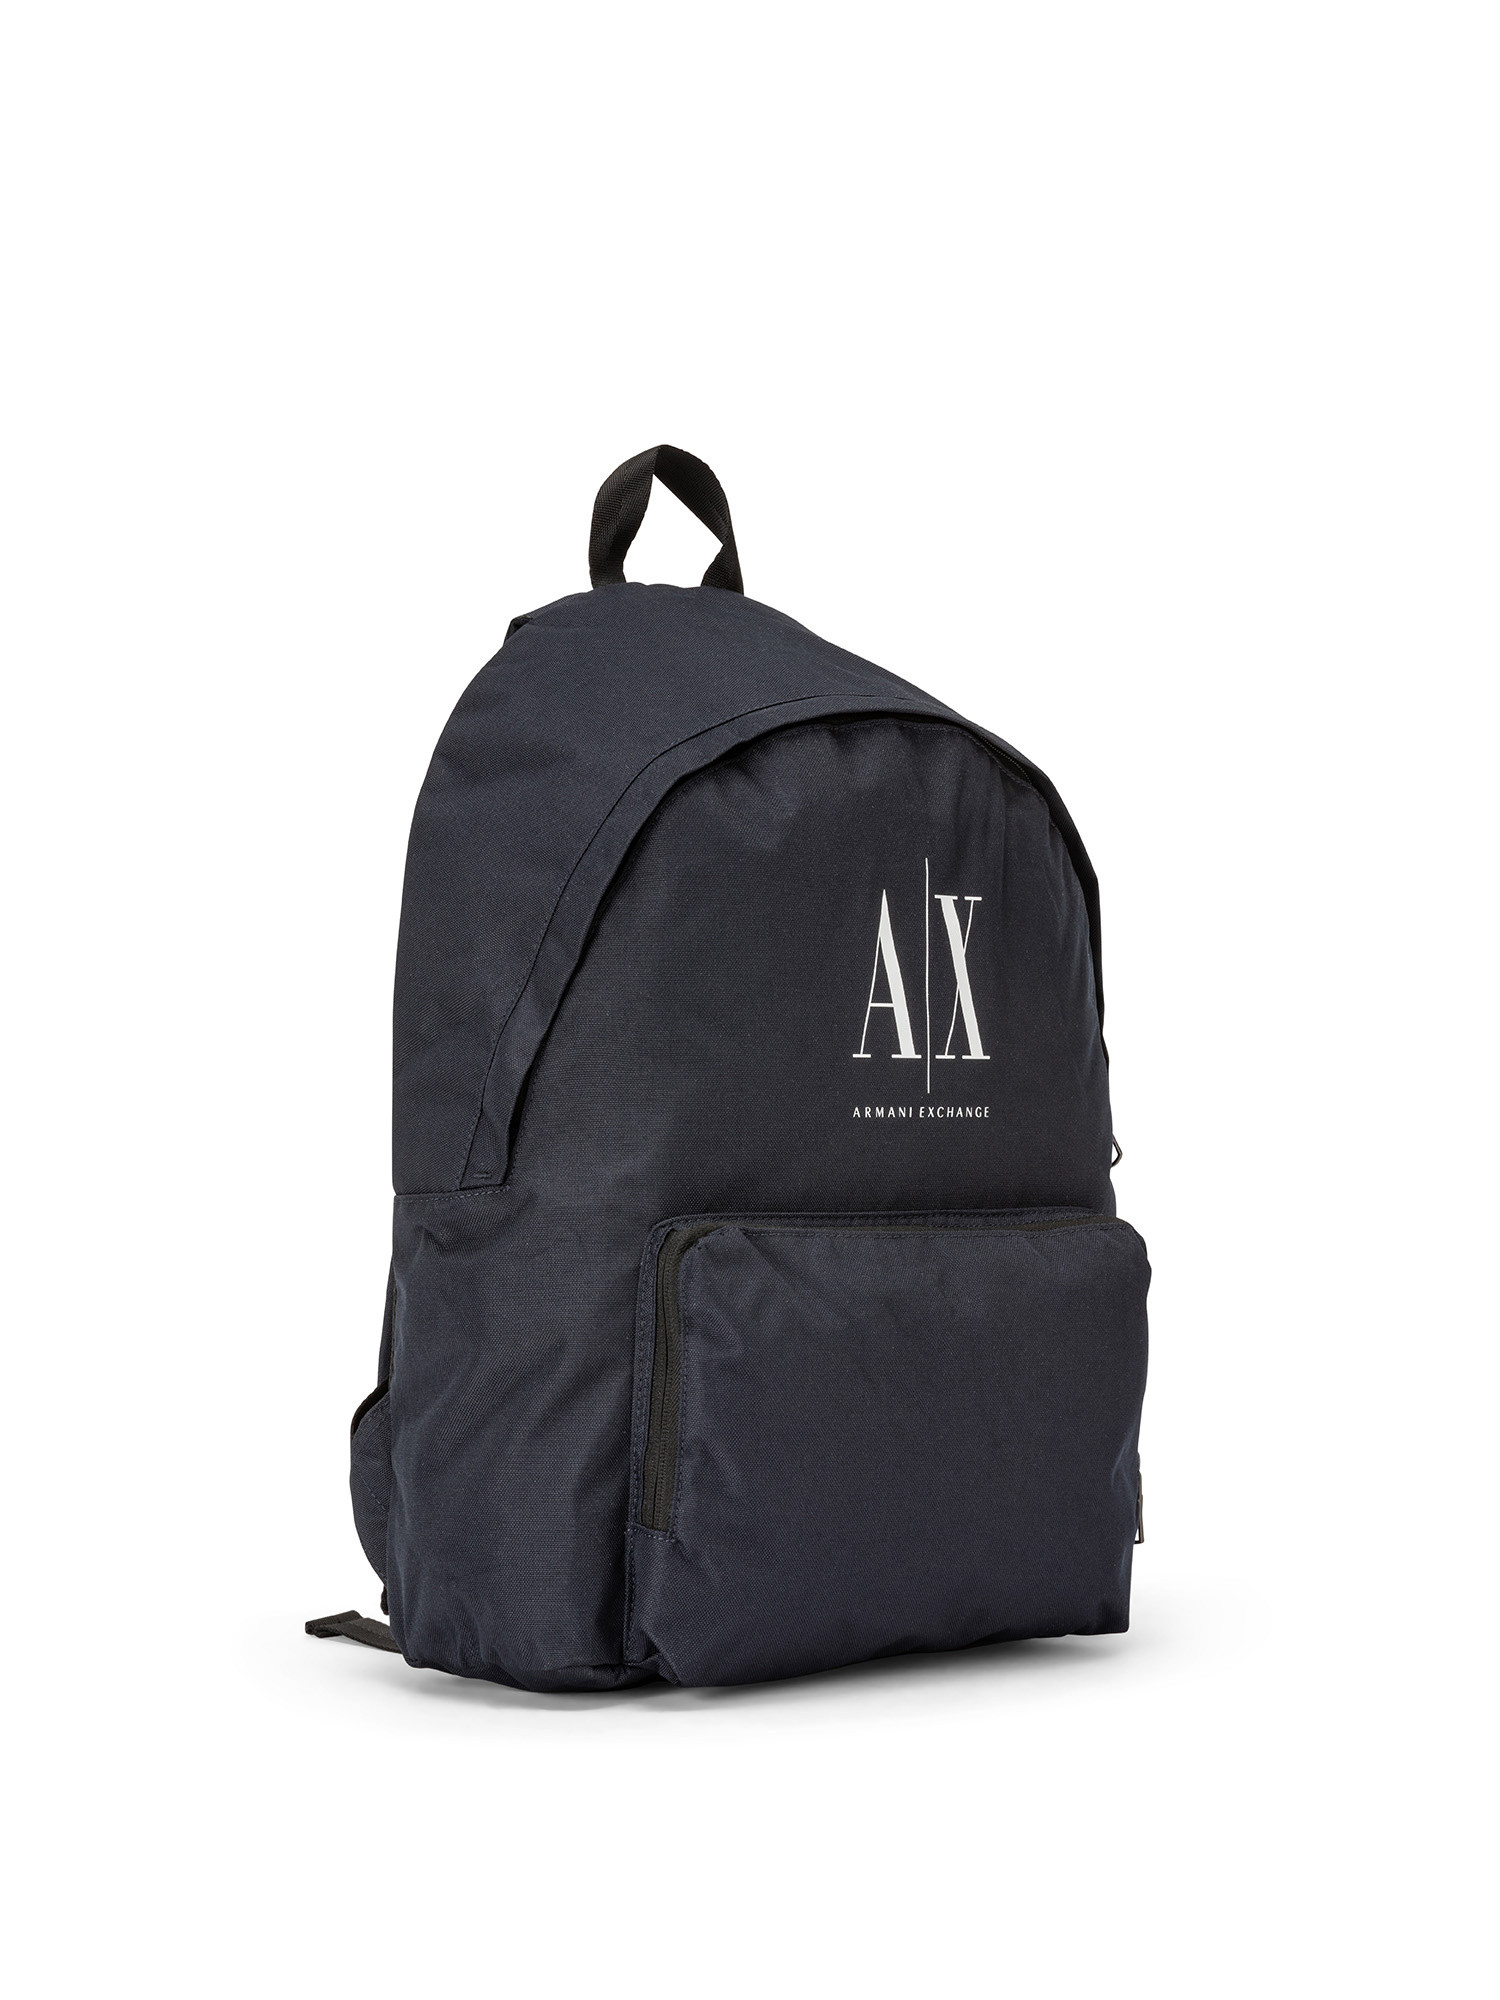 Armani Exchange - Nylon backpack with contrasting logo, Dark Blue, large image number 1